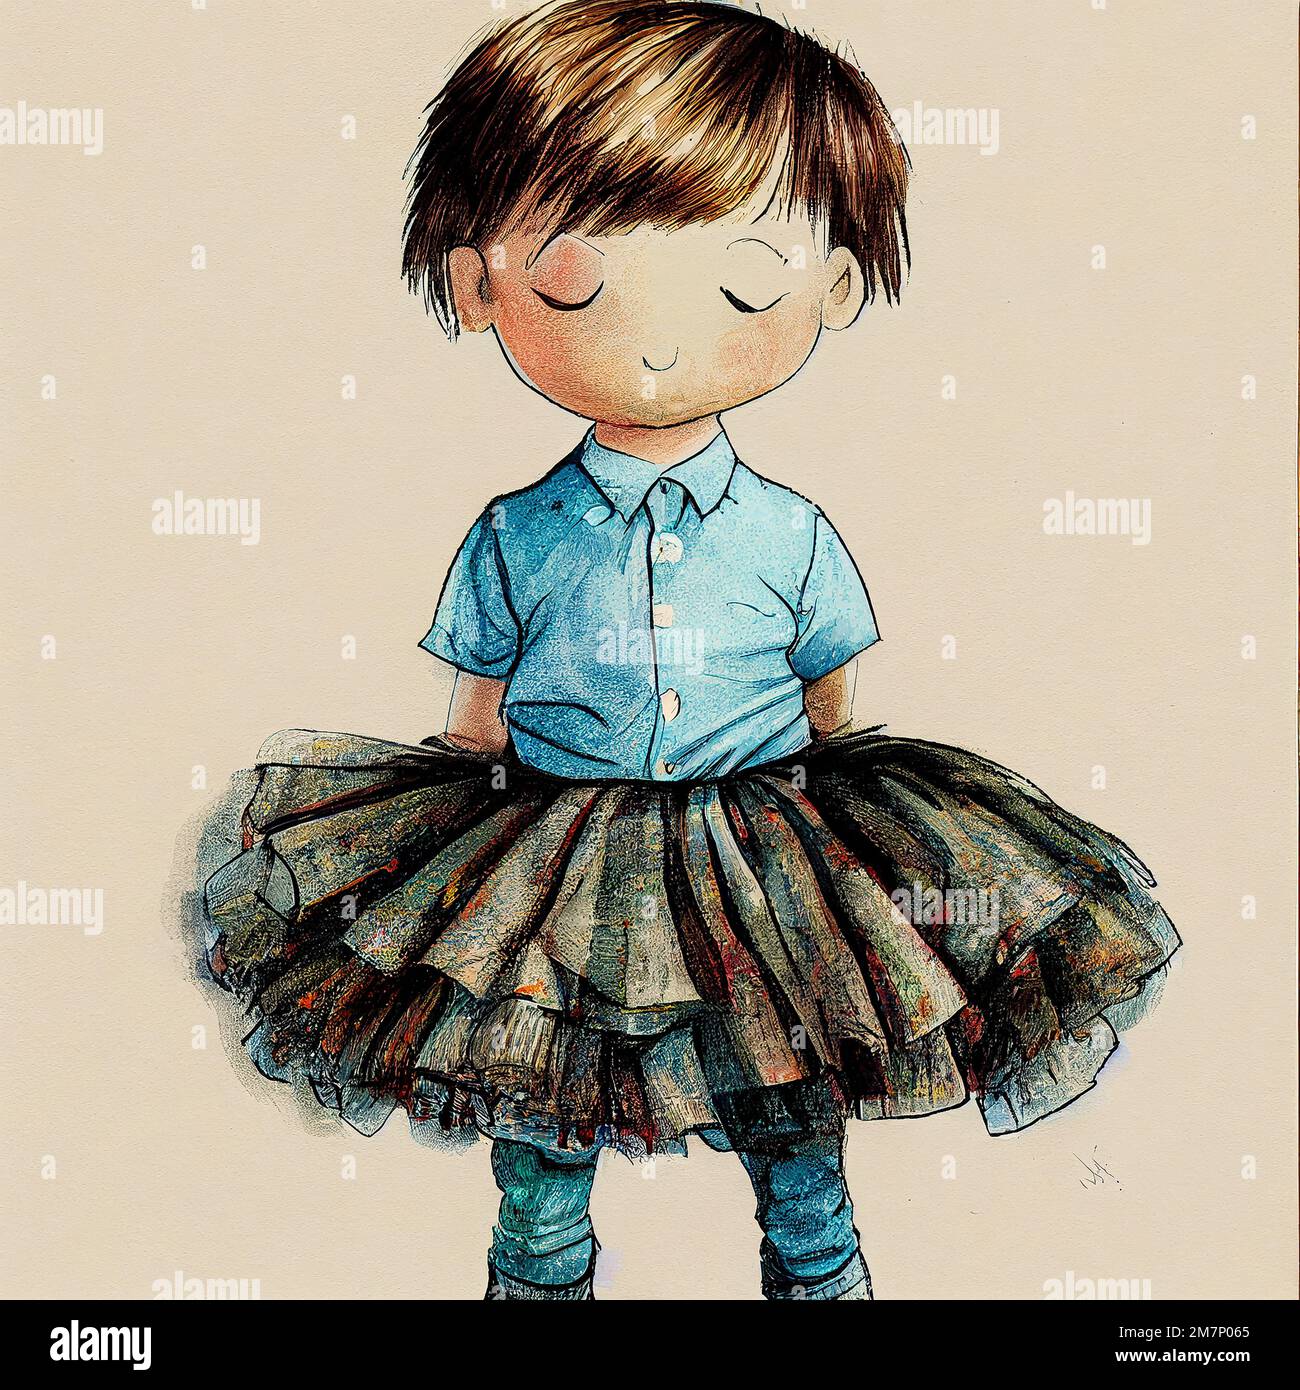 Illustration of a Boy with a tutu Stock Photo - Alamy